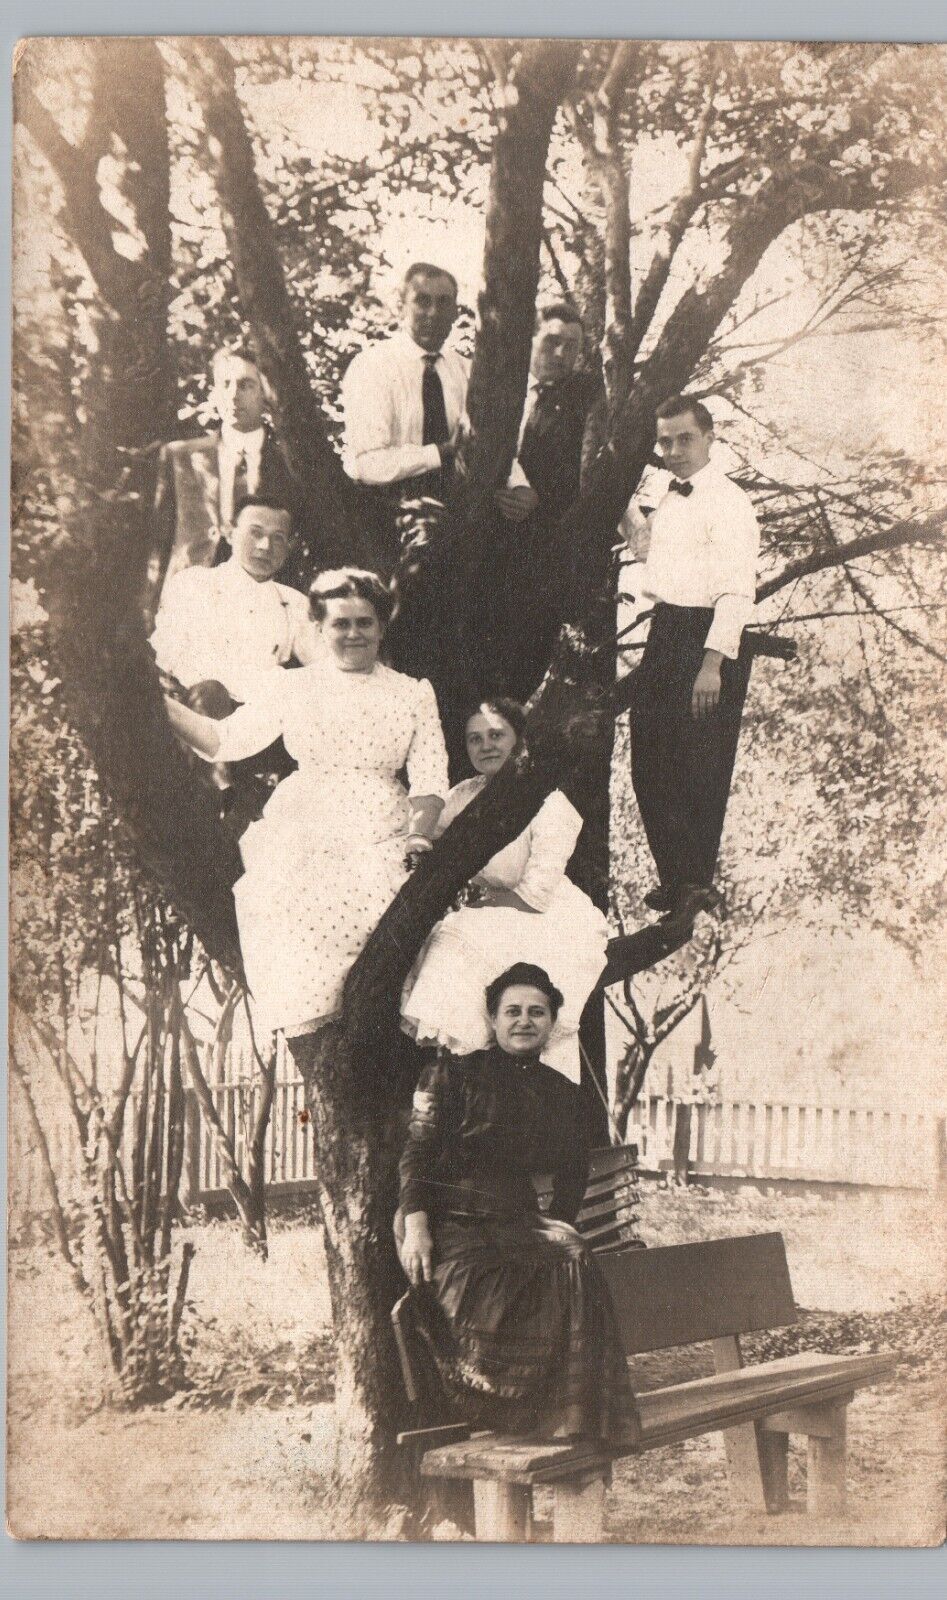 LADIES CLIMB TREE PARTY portland or real photo postcard rppc oregon history